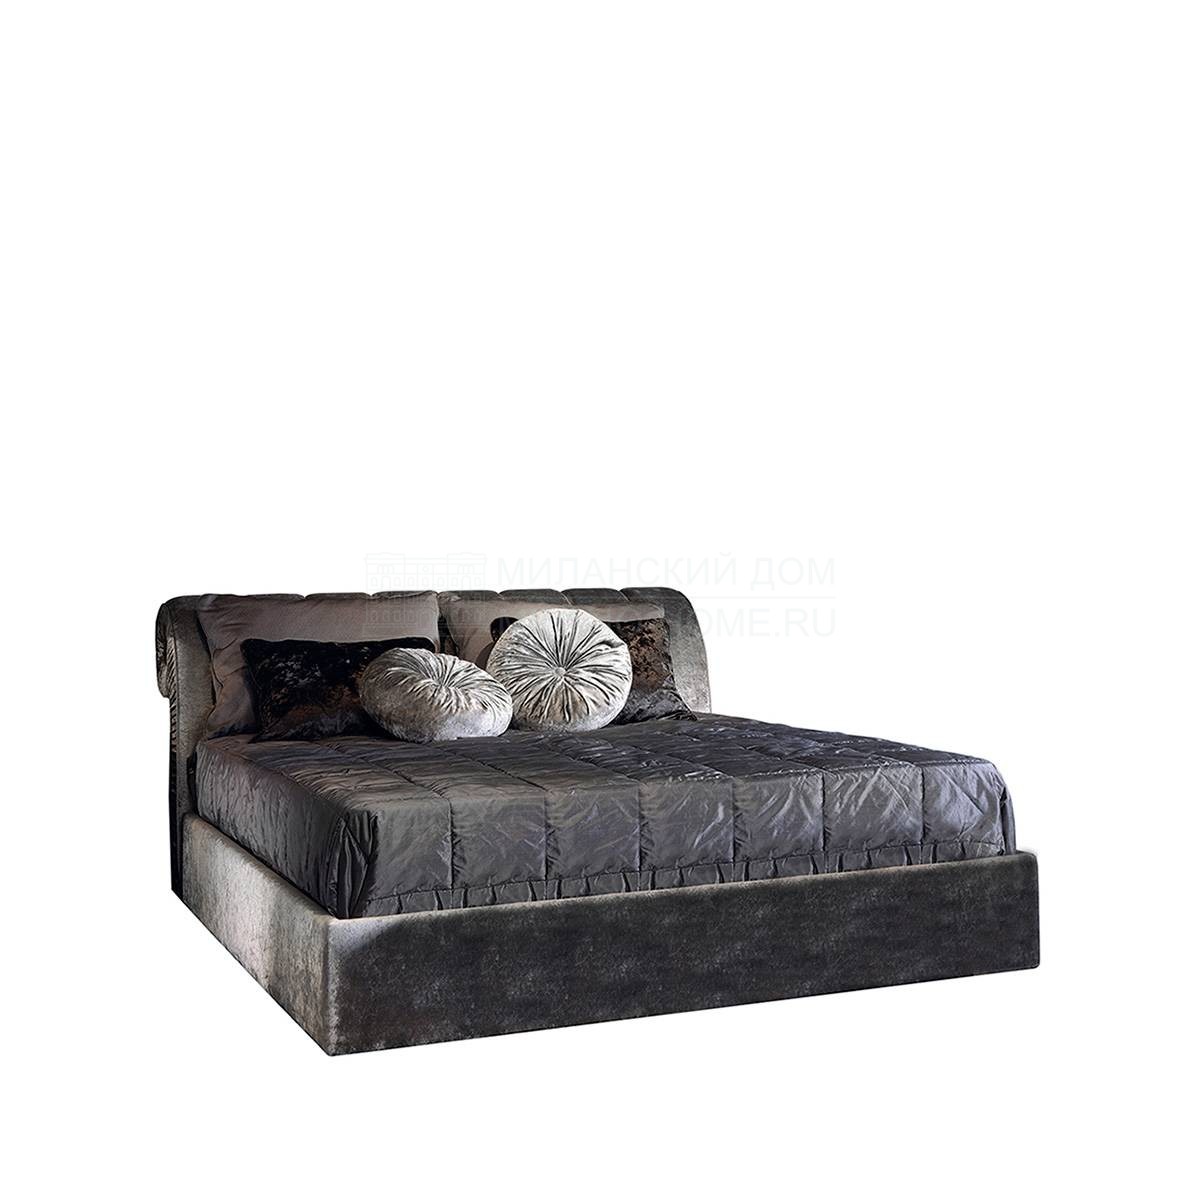 Кровать с мягким изголовьем Alba / art.S4955/ S4956/ S4957 из Испании фабрики COLECCION ALEXANDRA